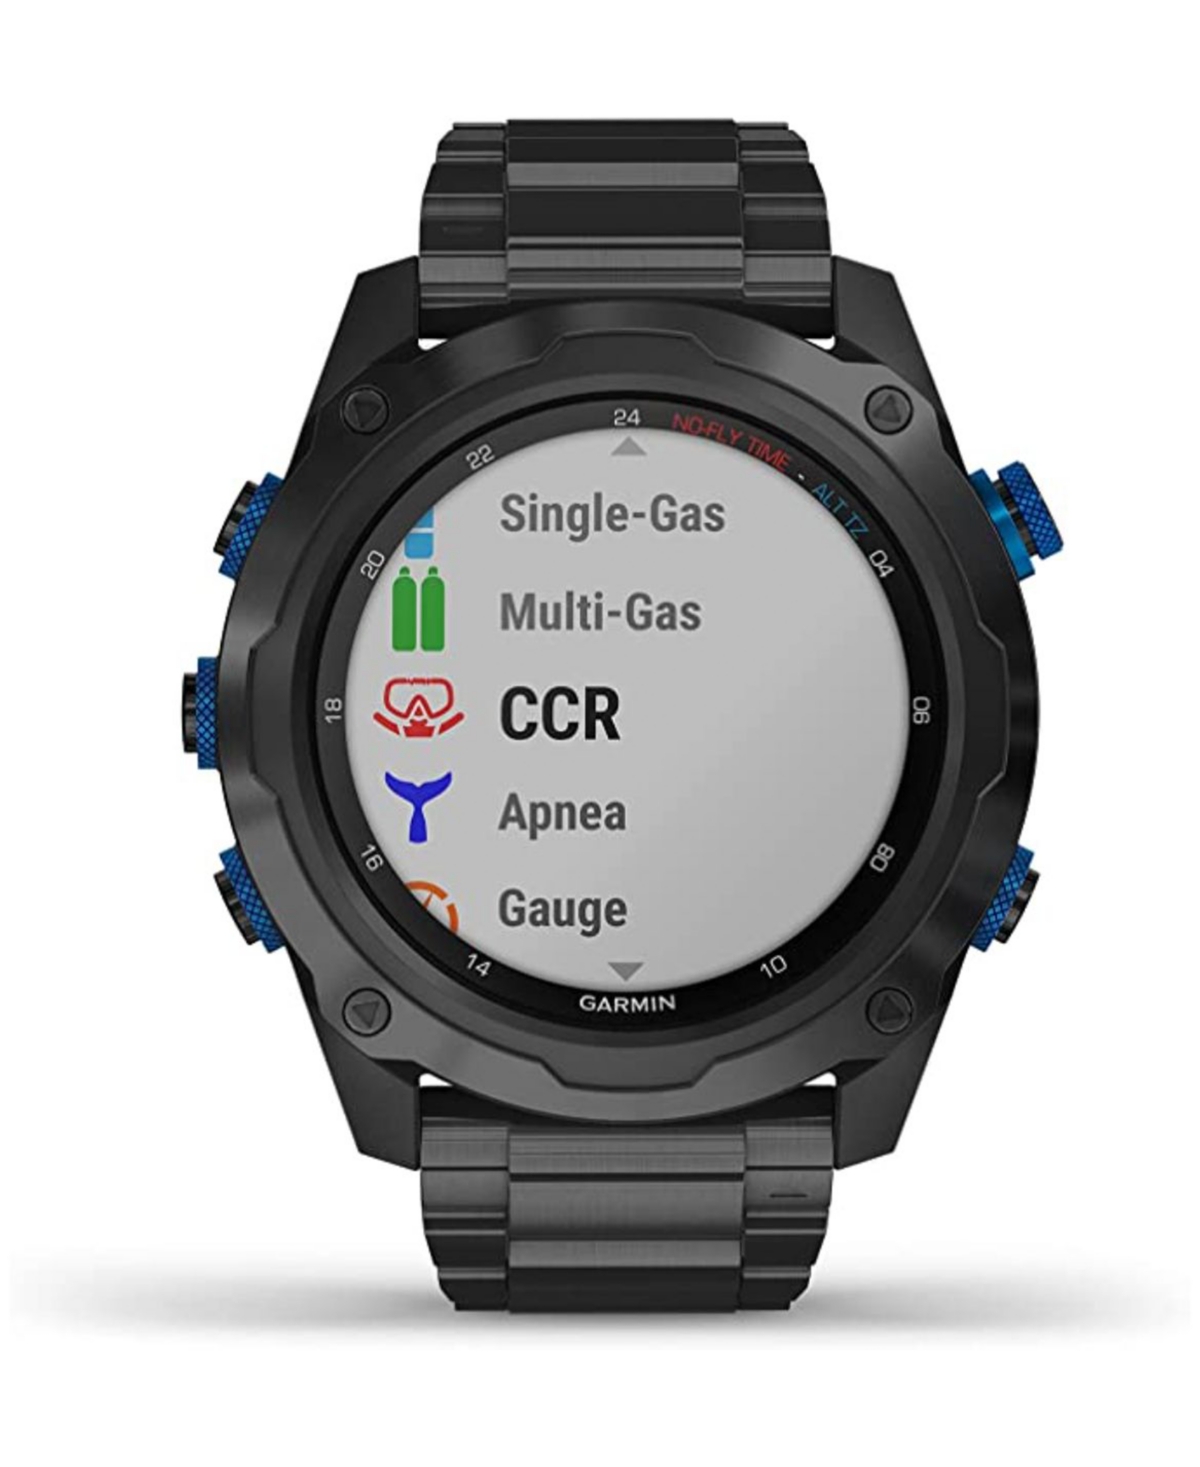 Unisex Descent Mk2i/t1 Carbon Gray Diamond-like Carbon (Dlc) Coated Titanium Band Watch, 35mm - Carbon Gray